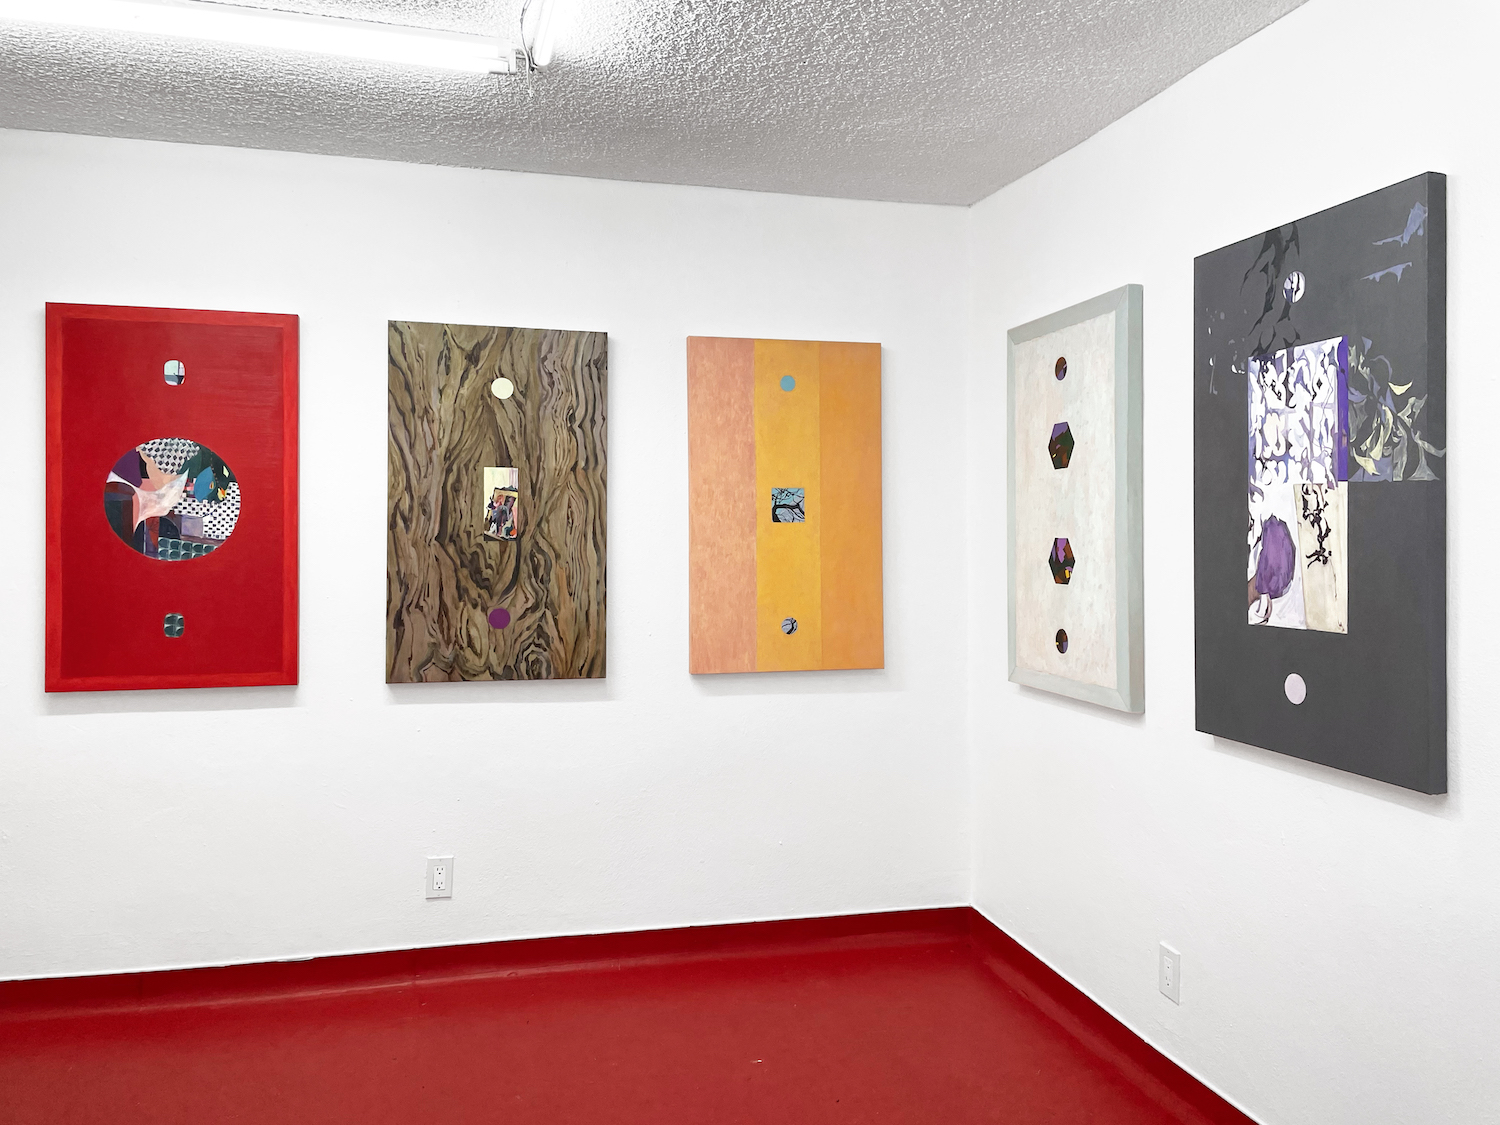 Lizzie Zelter's Art Exhibit “Wall Plates” Makes the Familiar Strange | San Diego Magazine